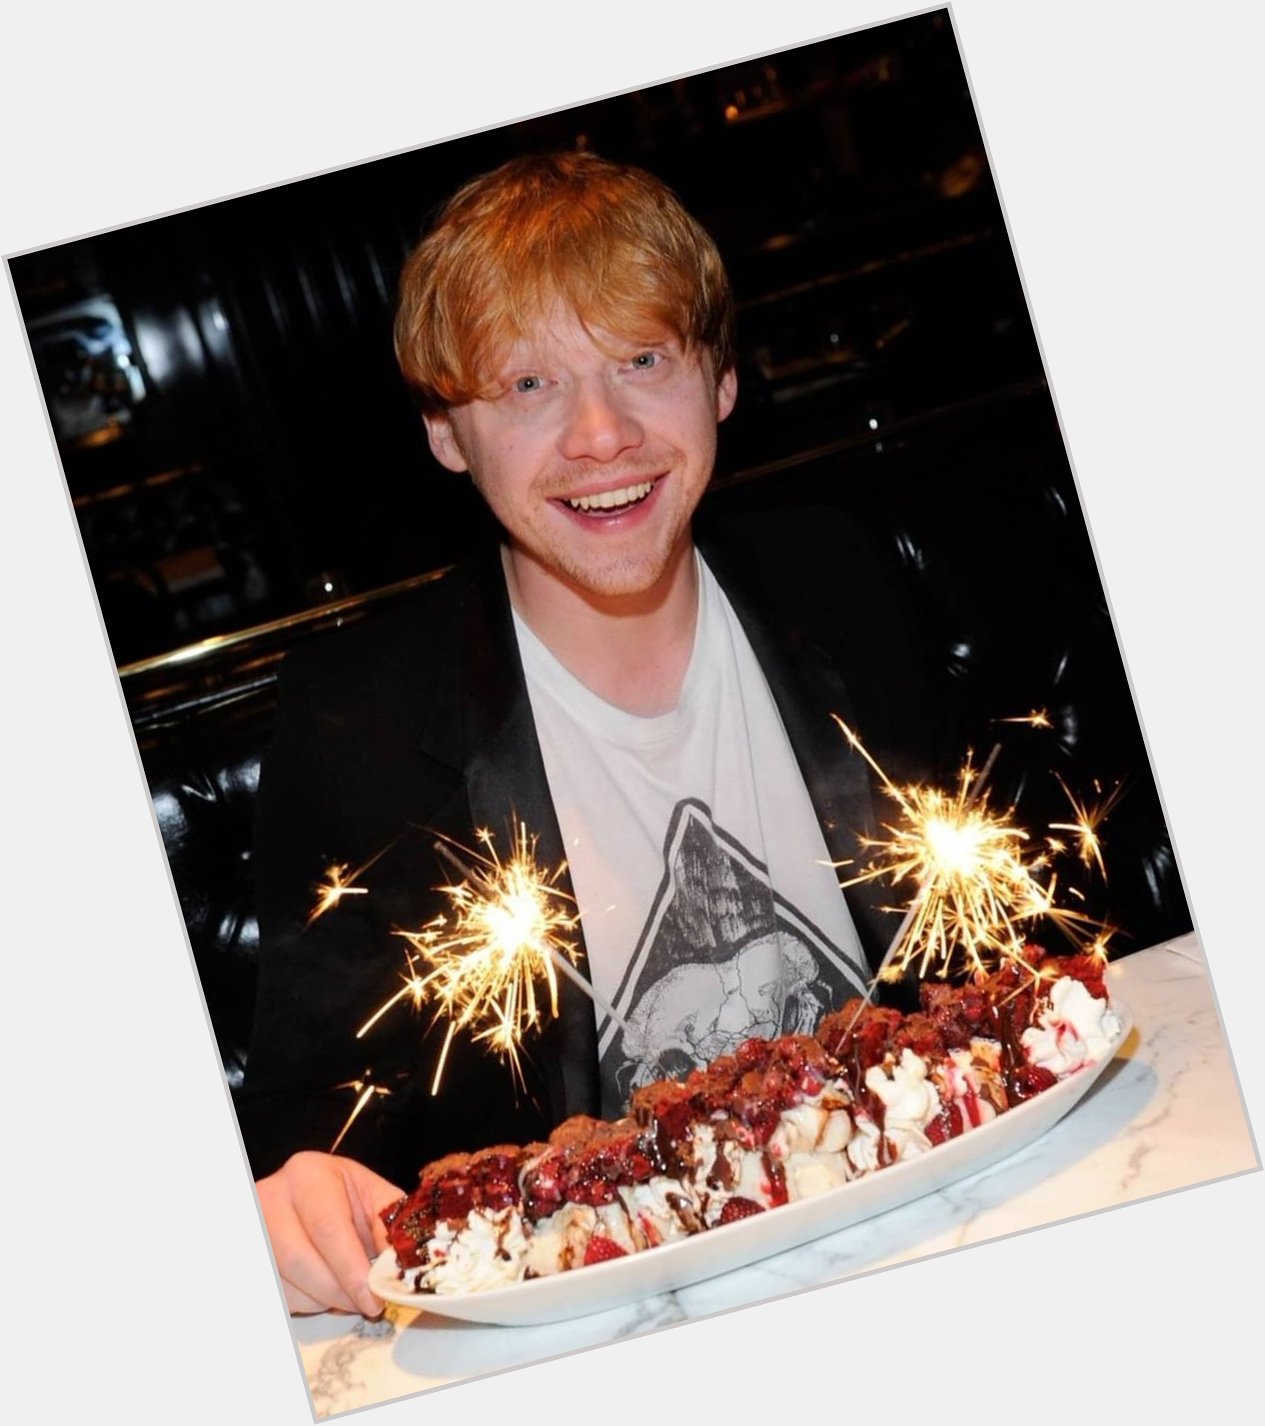 Yeayyy happy 33rd birthday Rupert Grint @ Ronald Bilius Weasley!! >.< 